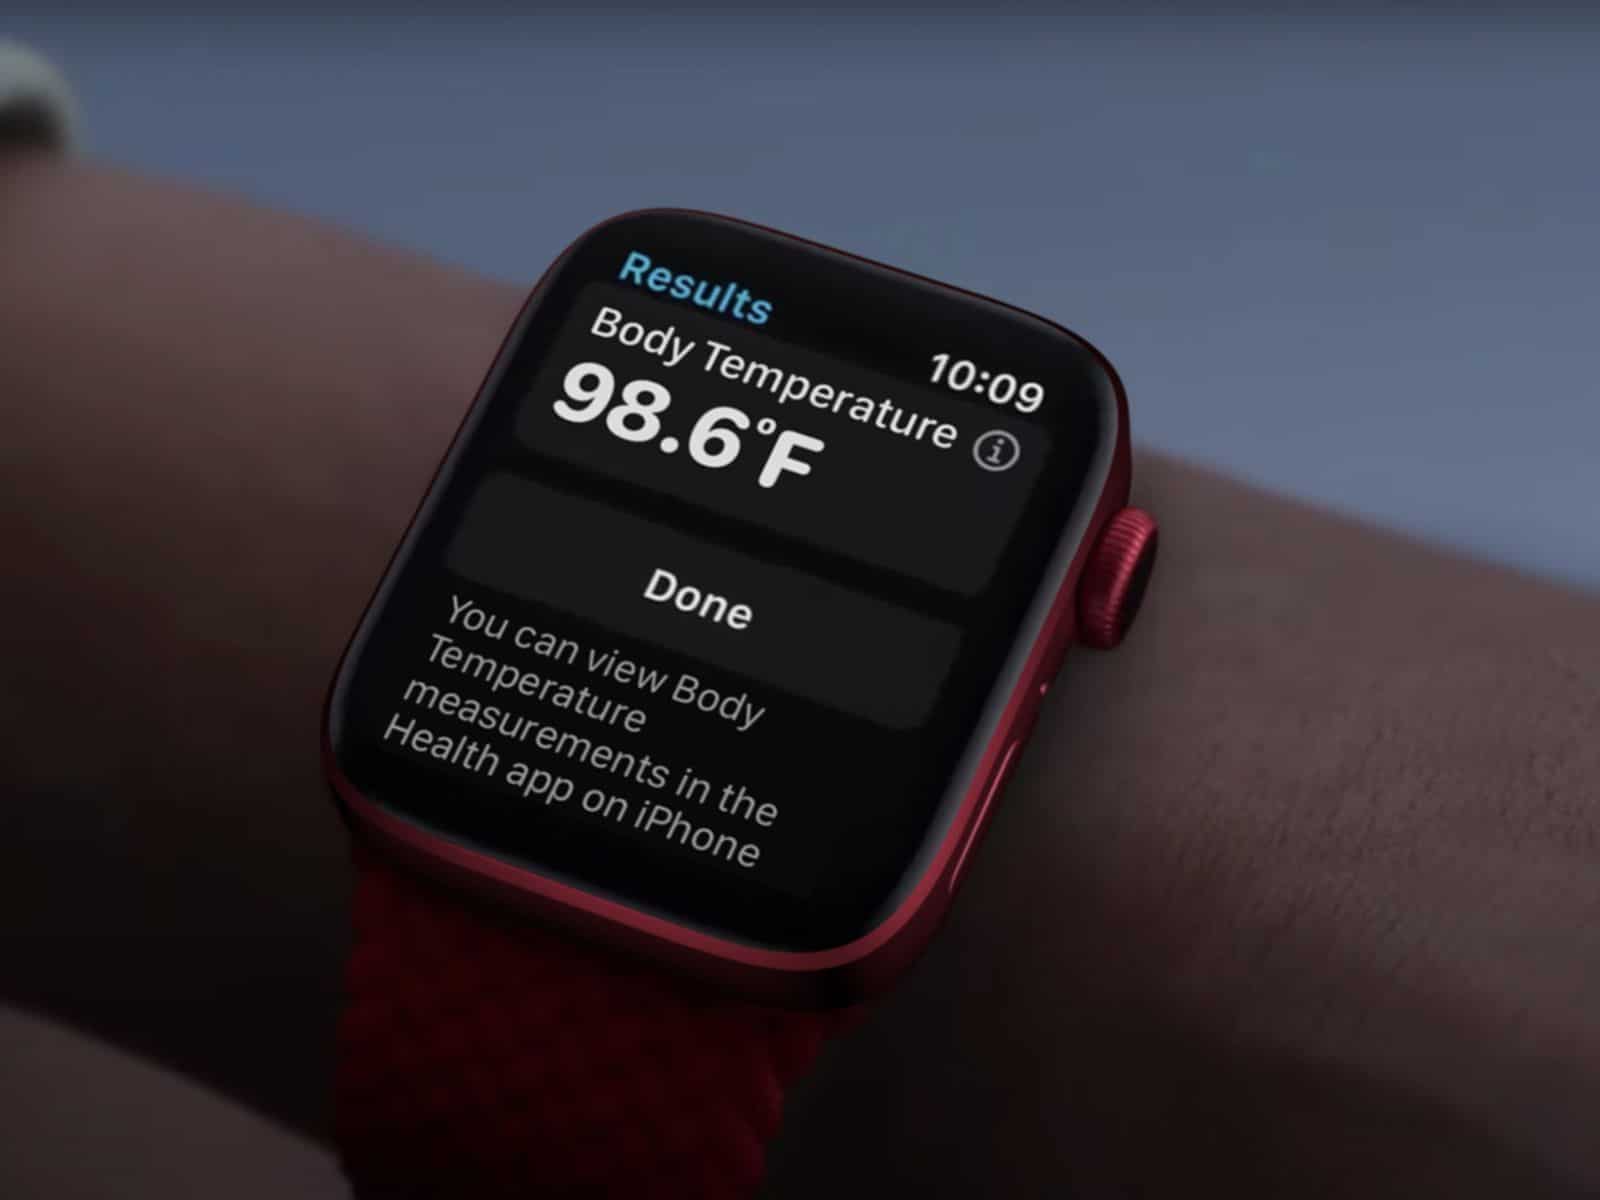 Bradesco apresenta aplicativo para Apple Watch